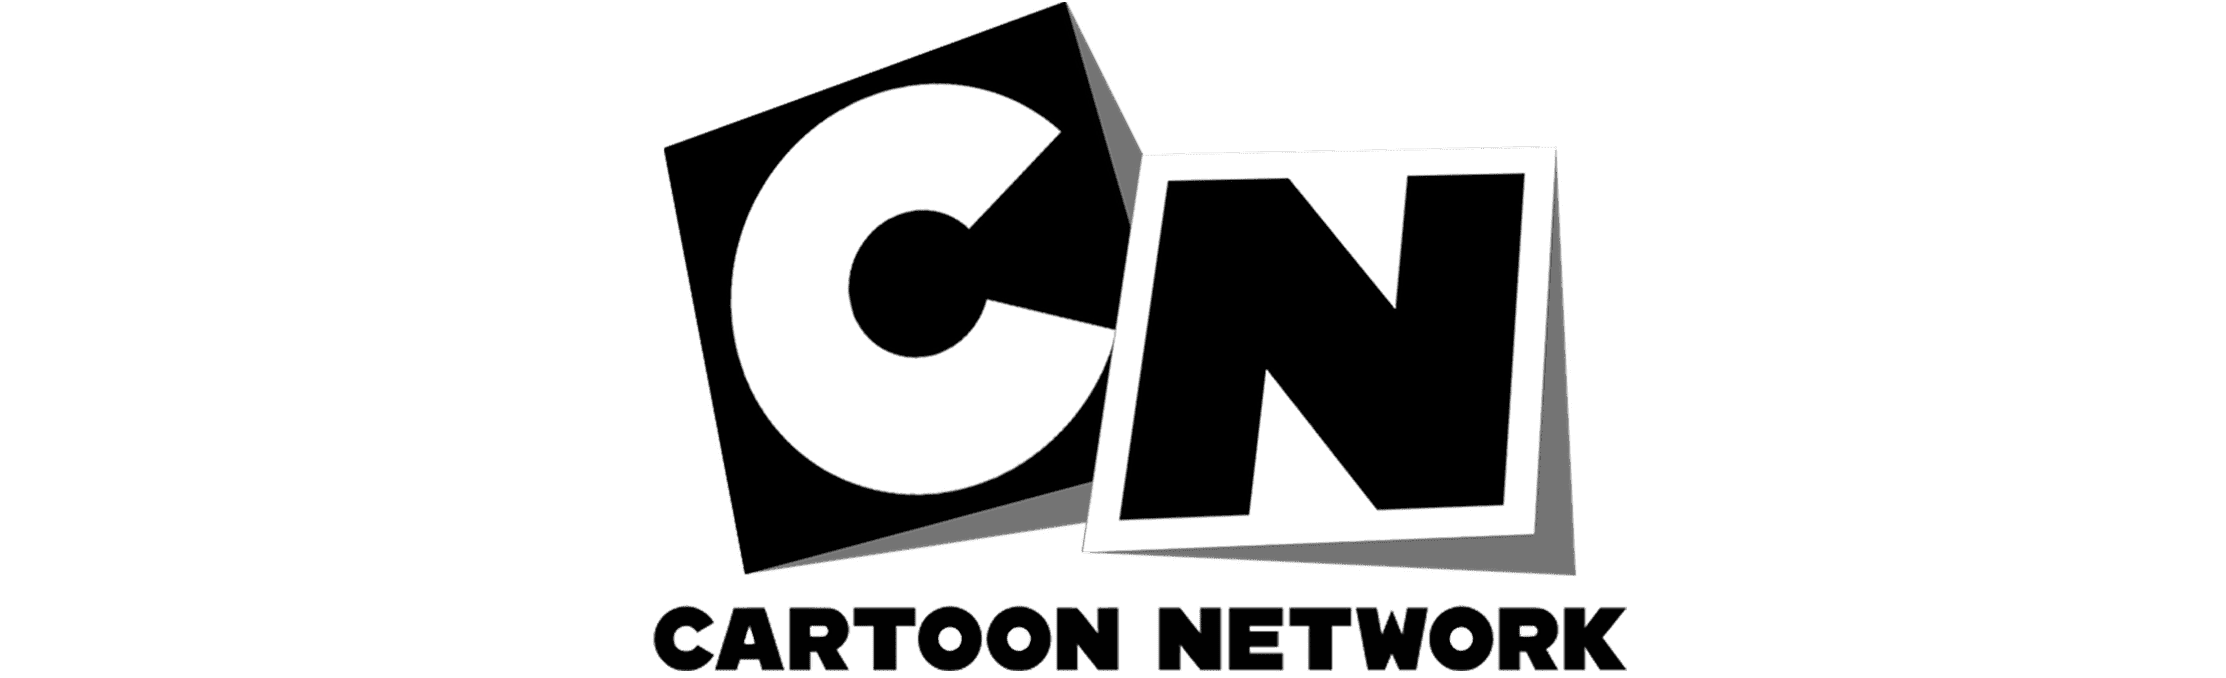 CN NETWORK.